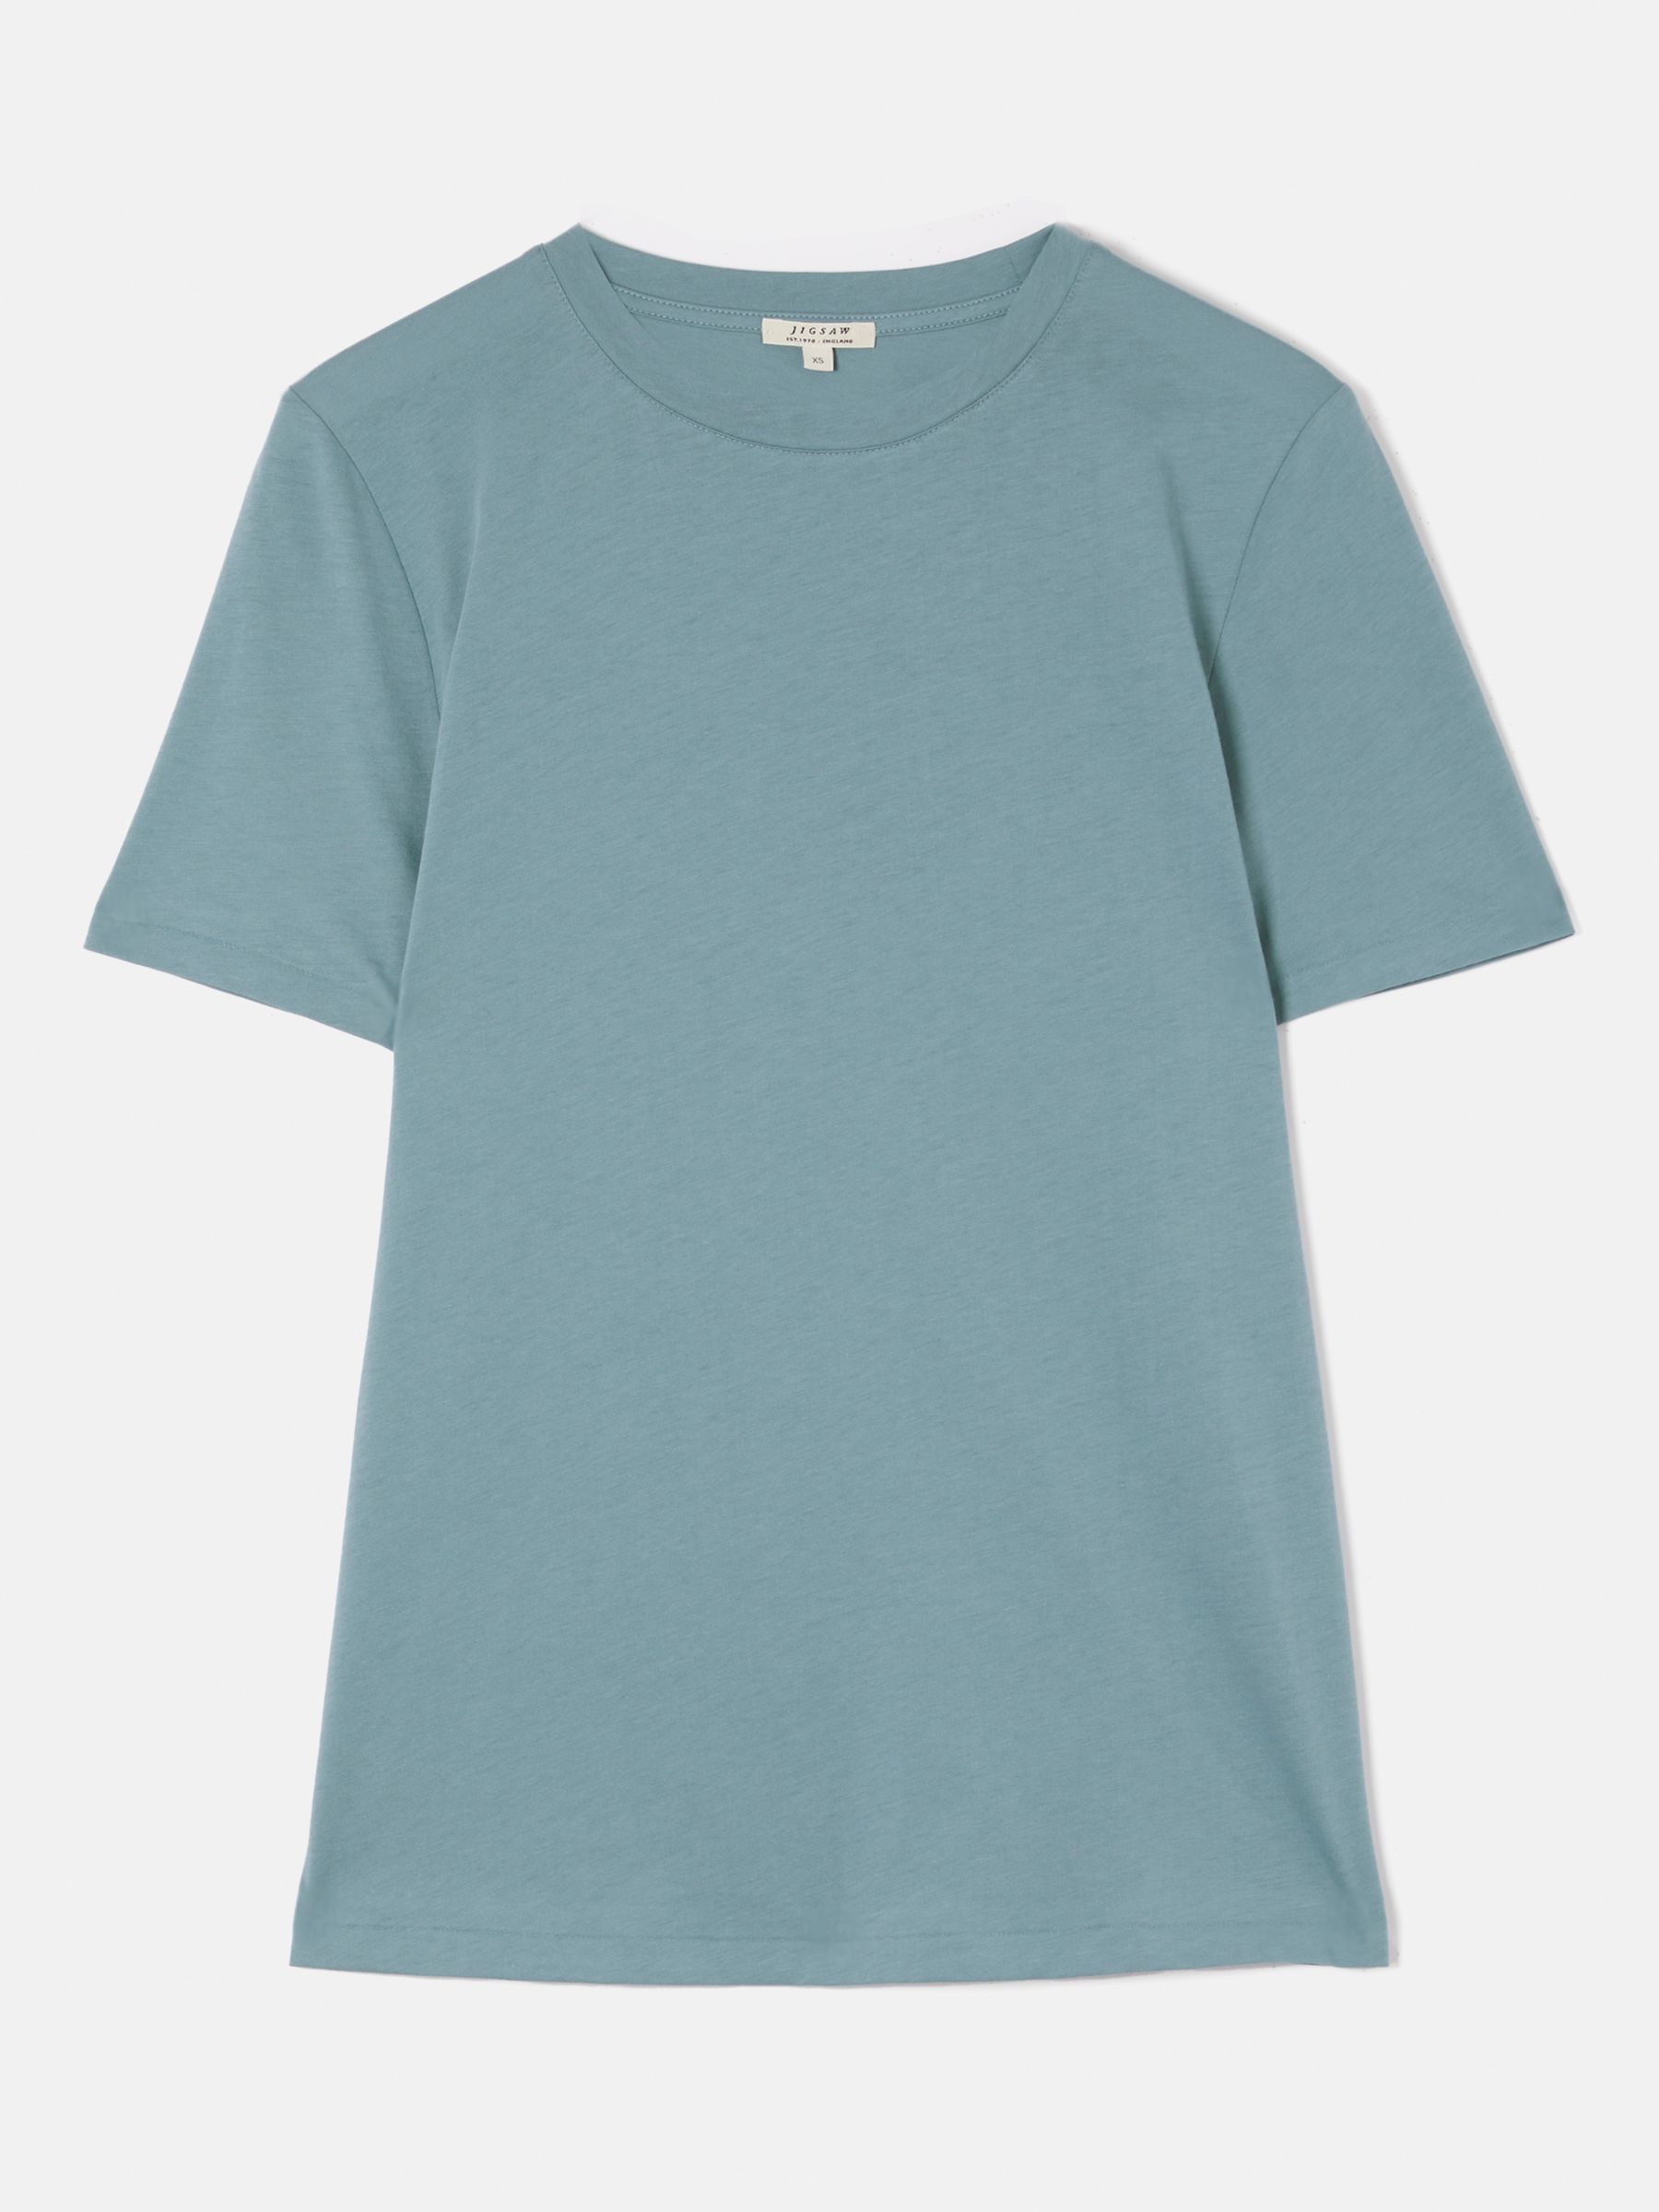 Jigsaw Supima Cotton Crew Neck T-Shirt, Blue, L